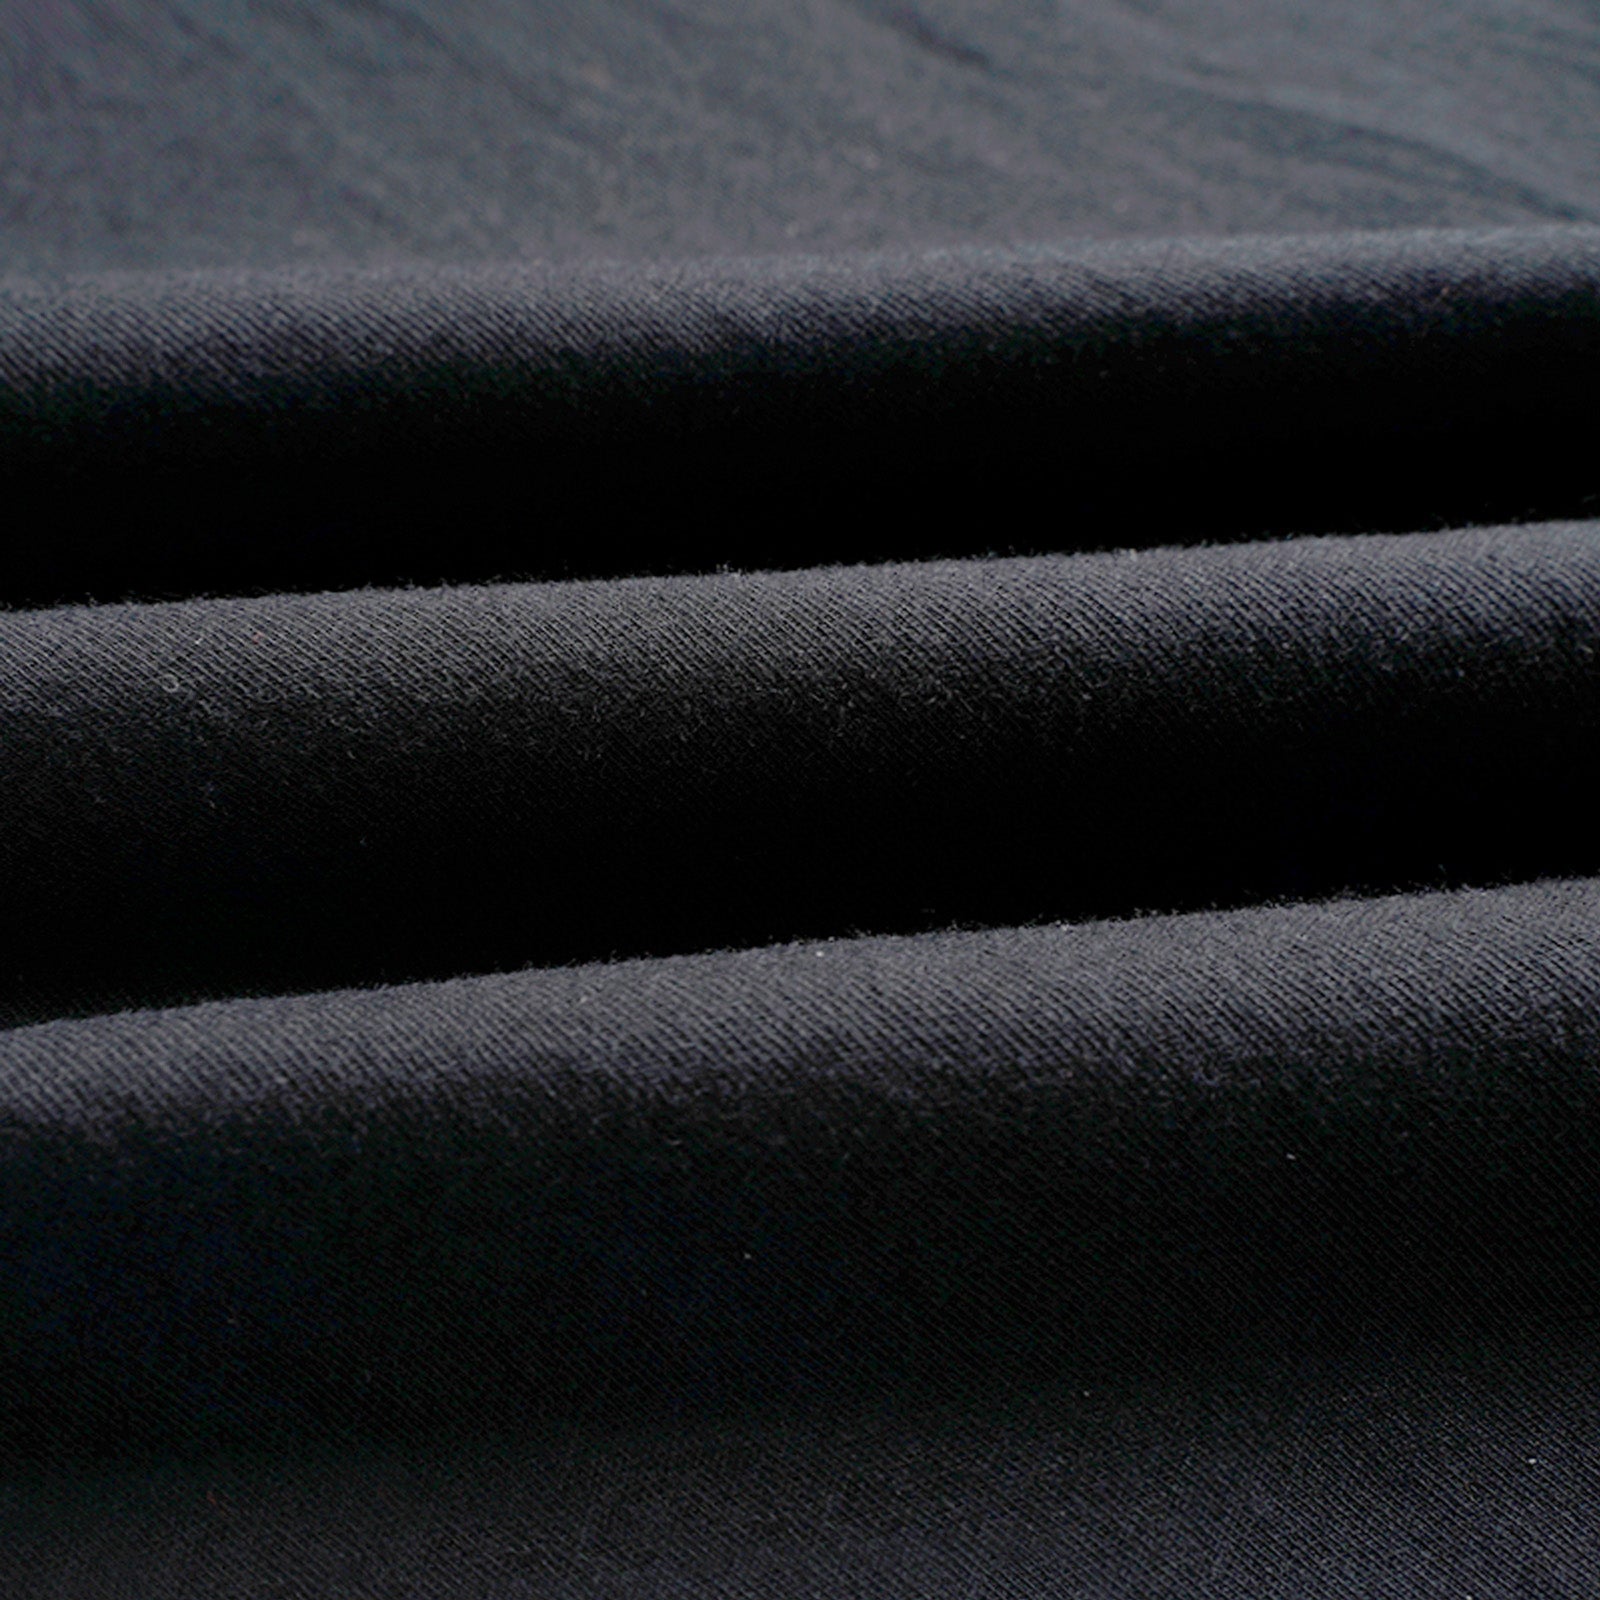 Uprandy Cool Keep It Twisted Printed Black T-Shirt - chicyea